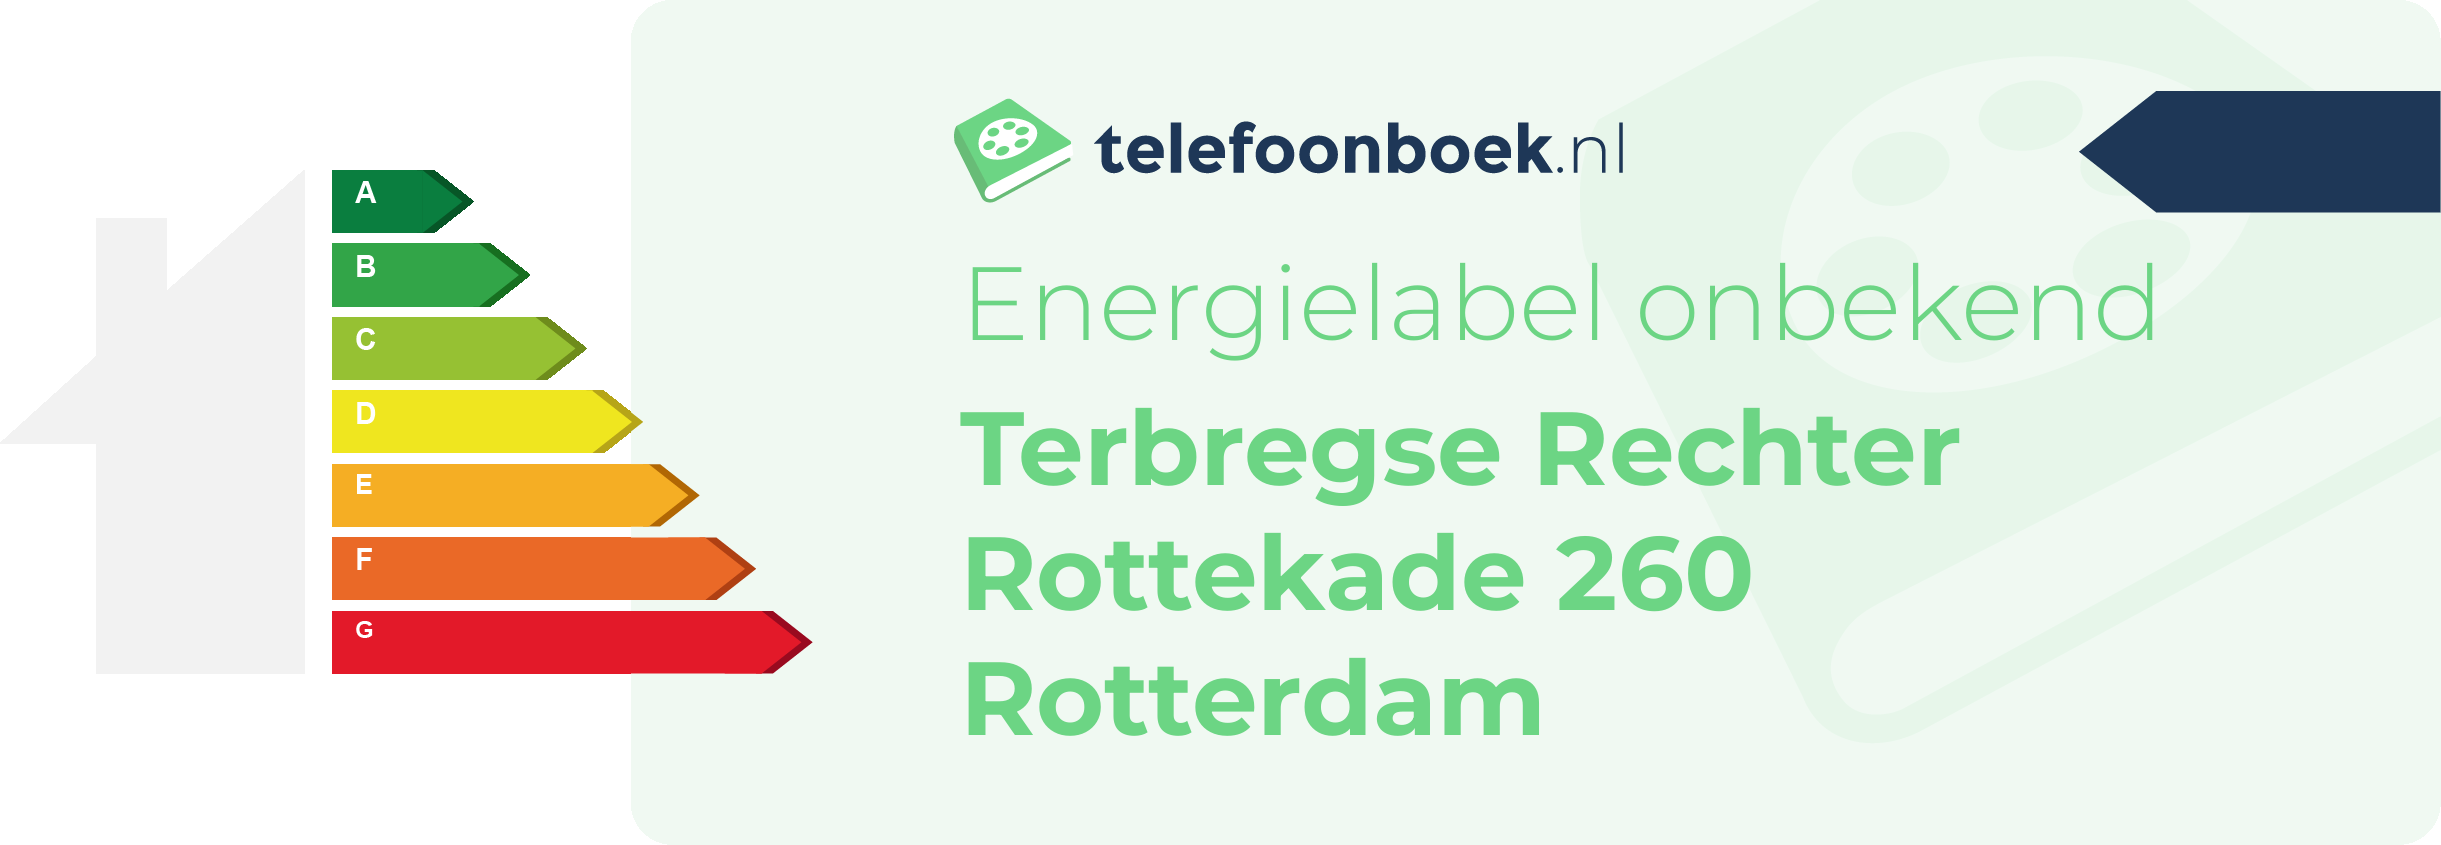 Energielabel Terbregse Rechter Rottekade 260 Rotterdam